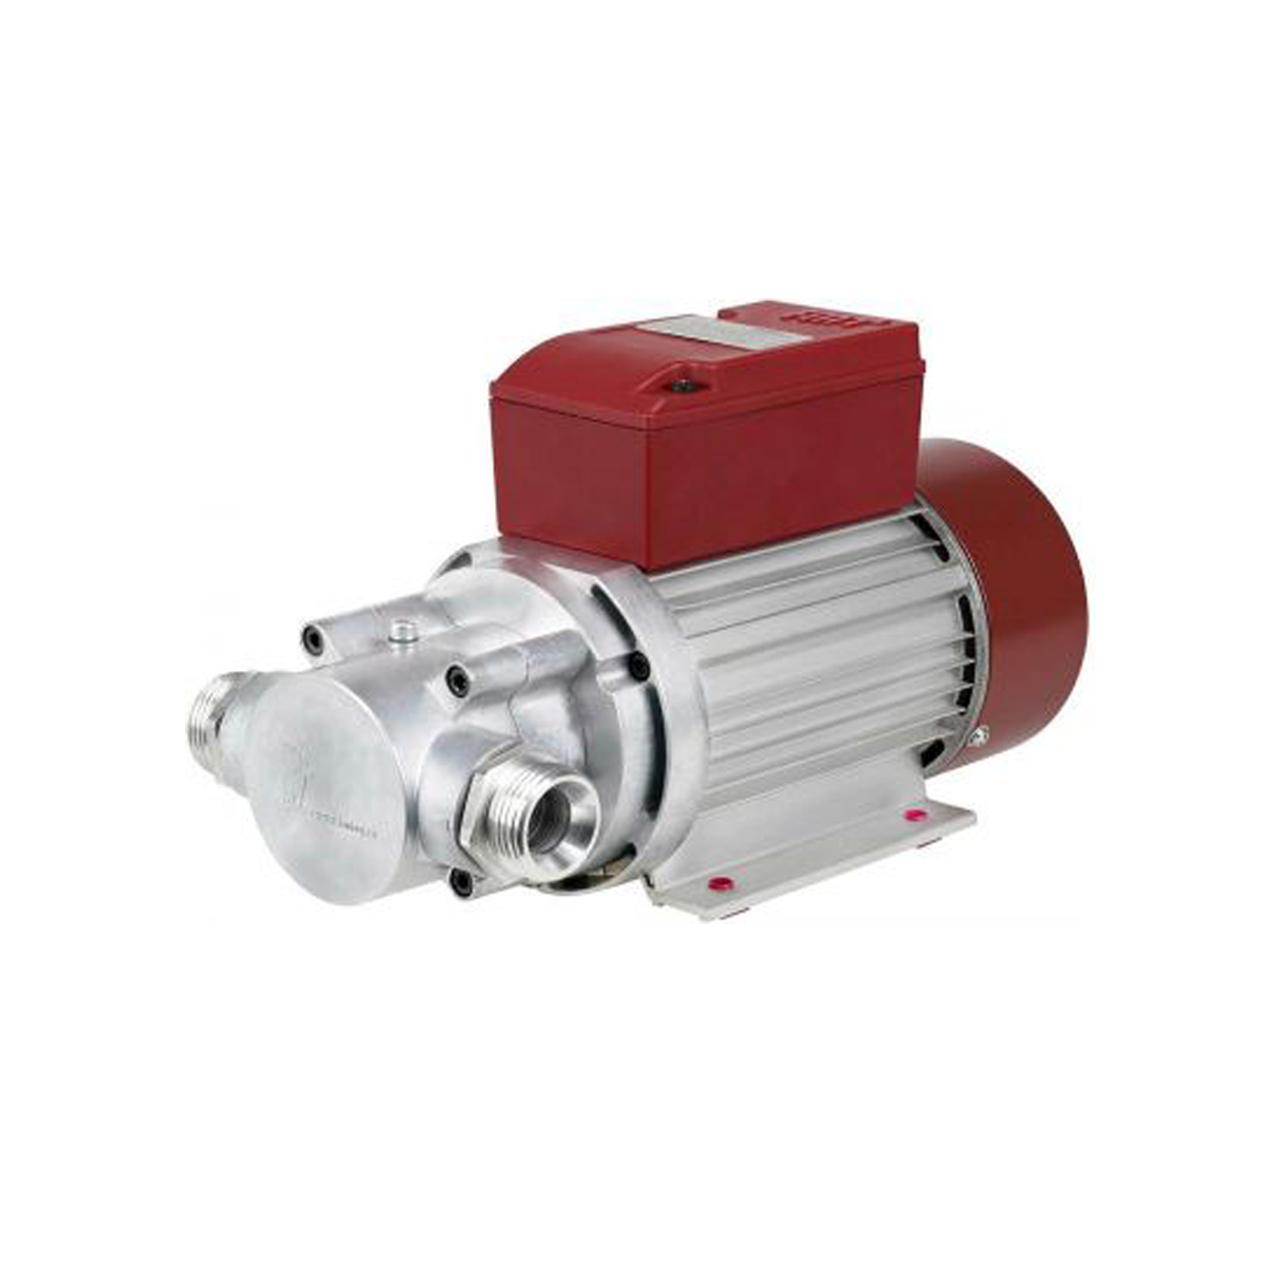 FMT Diesel Transfer Vane Pump 230V, 60lpm - Atkinson Equipment Ltd